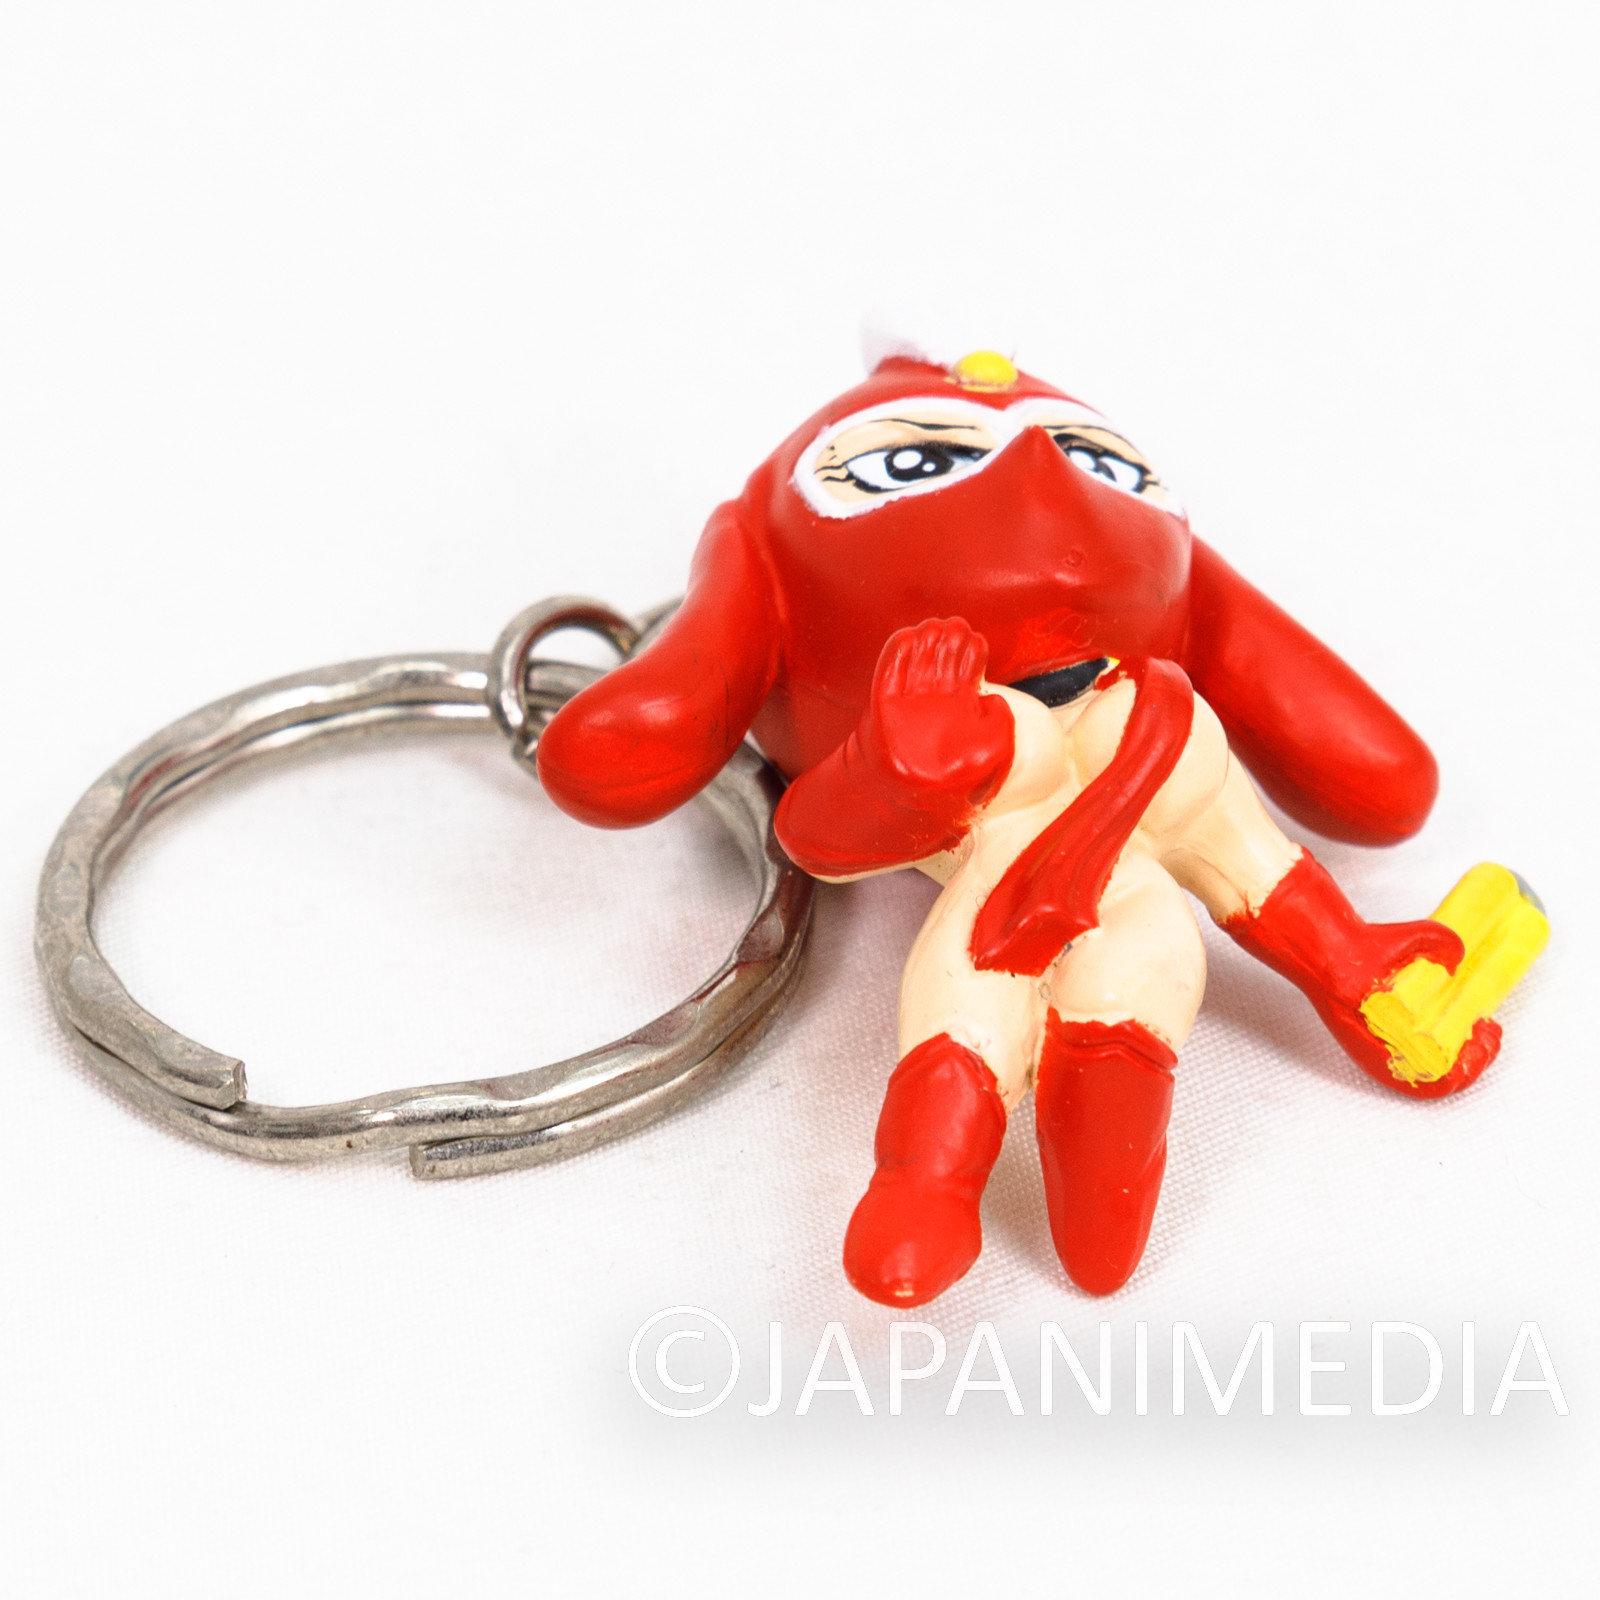 Kekko Kamen Nagai Go Characters Figure Key Chain Banpresto JAPAN ANIME 2